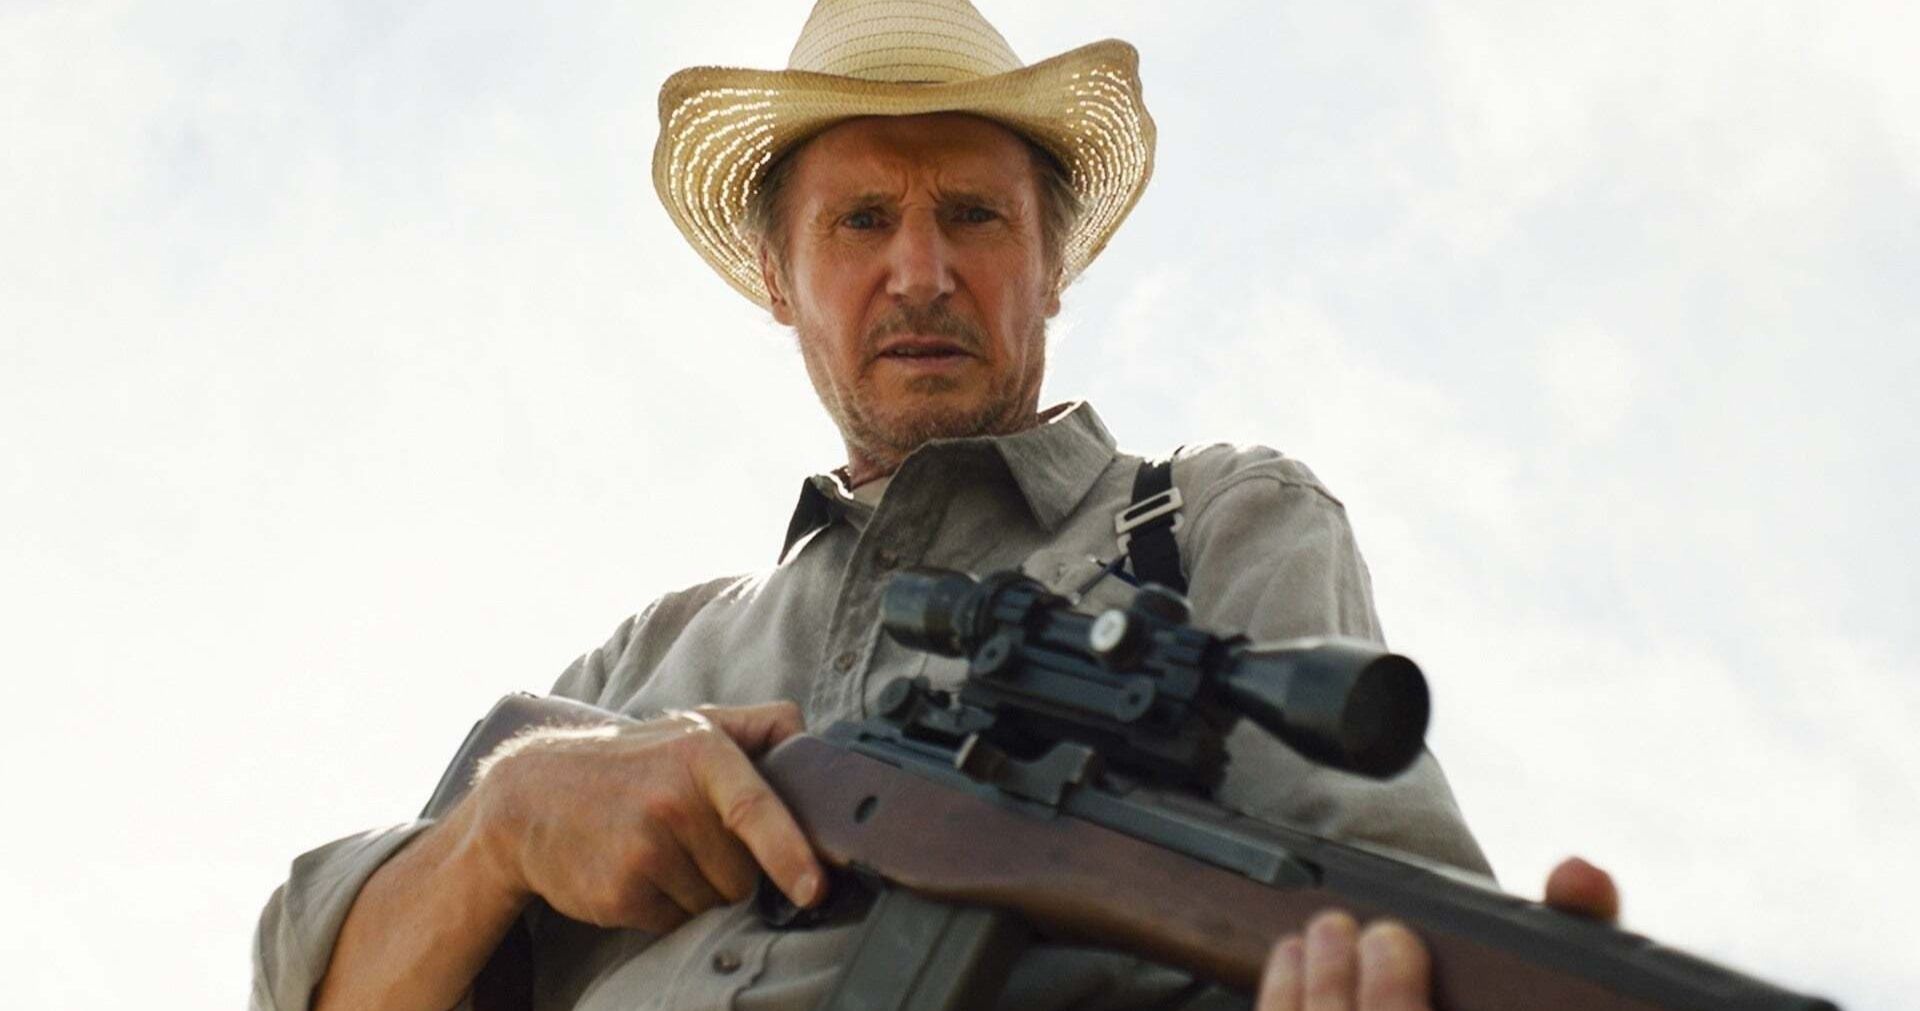 Liam Neeson Talks The Marksman in New Featurette [Exclusive]